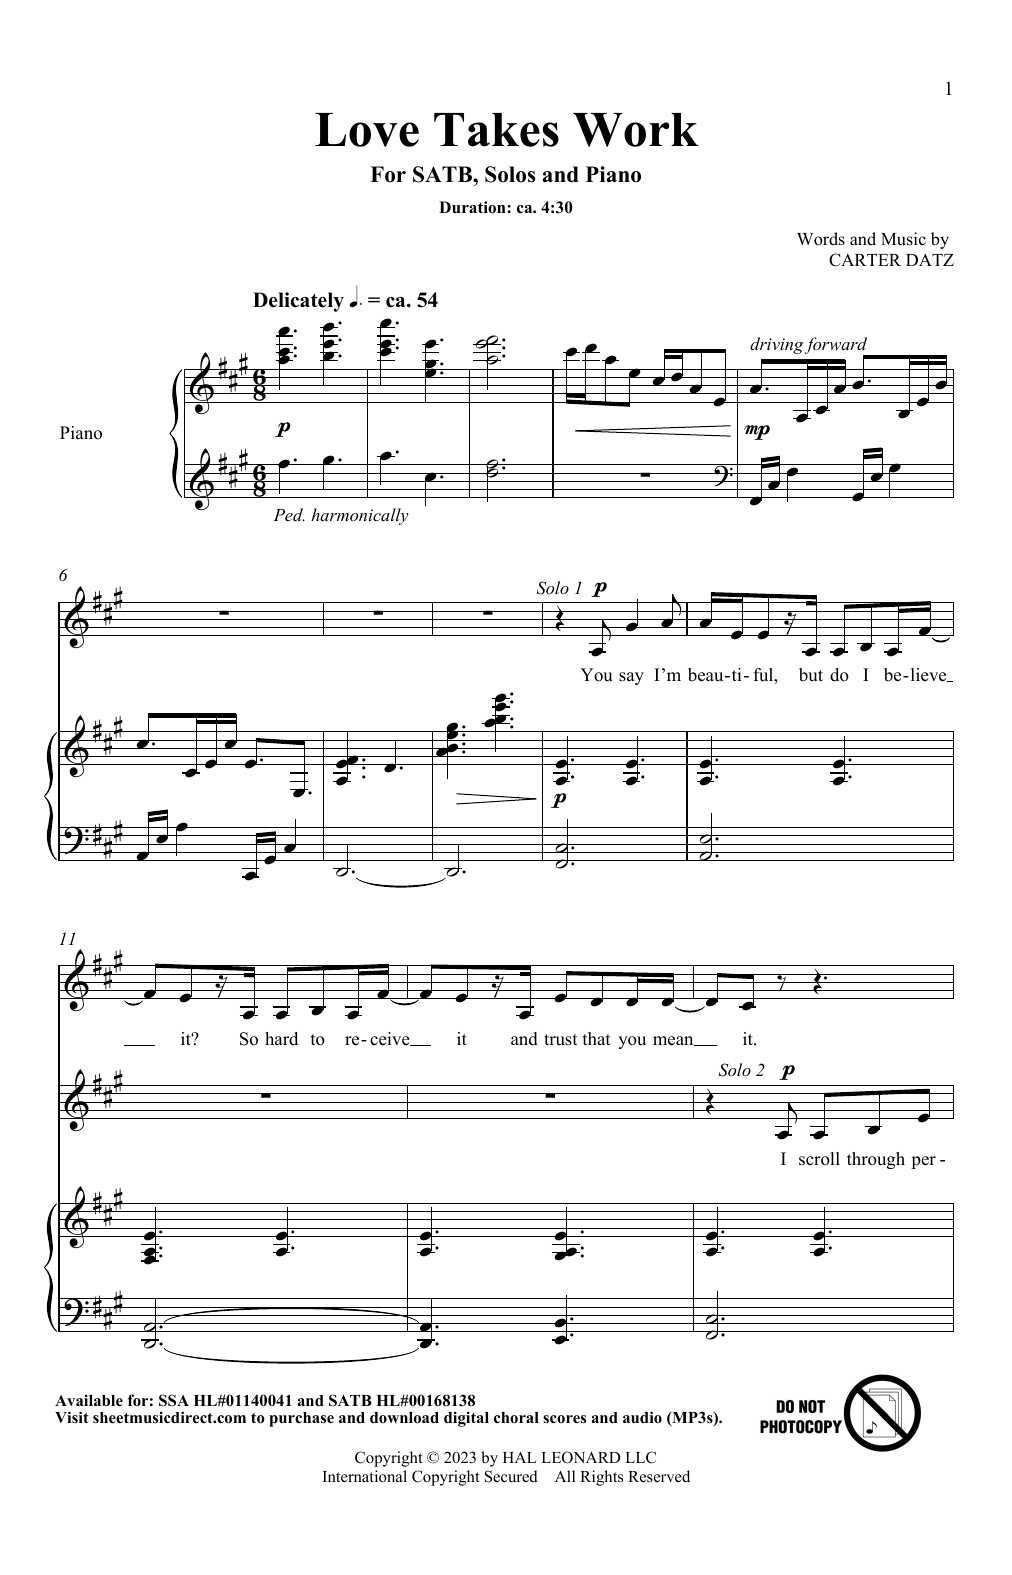 Carter Datz Love Takes Work Sheet Music Notes & Chords for SATB Choir - Download or Print PDF